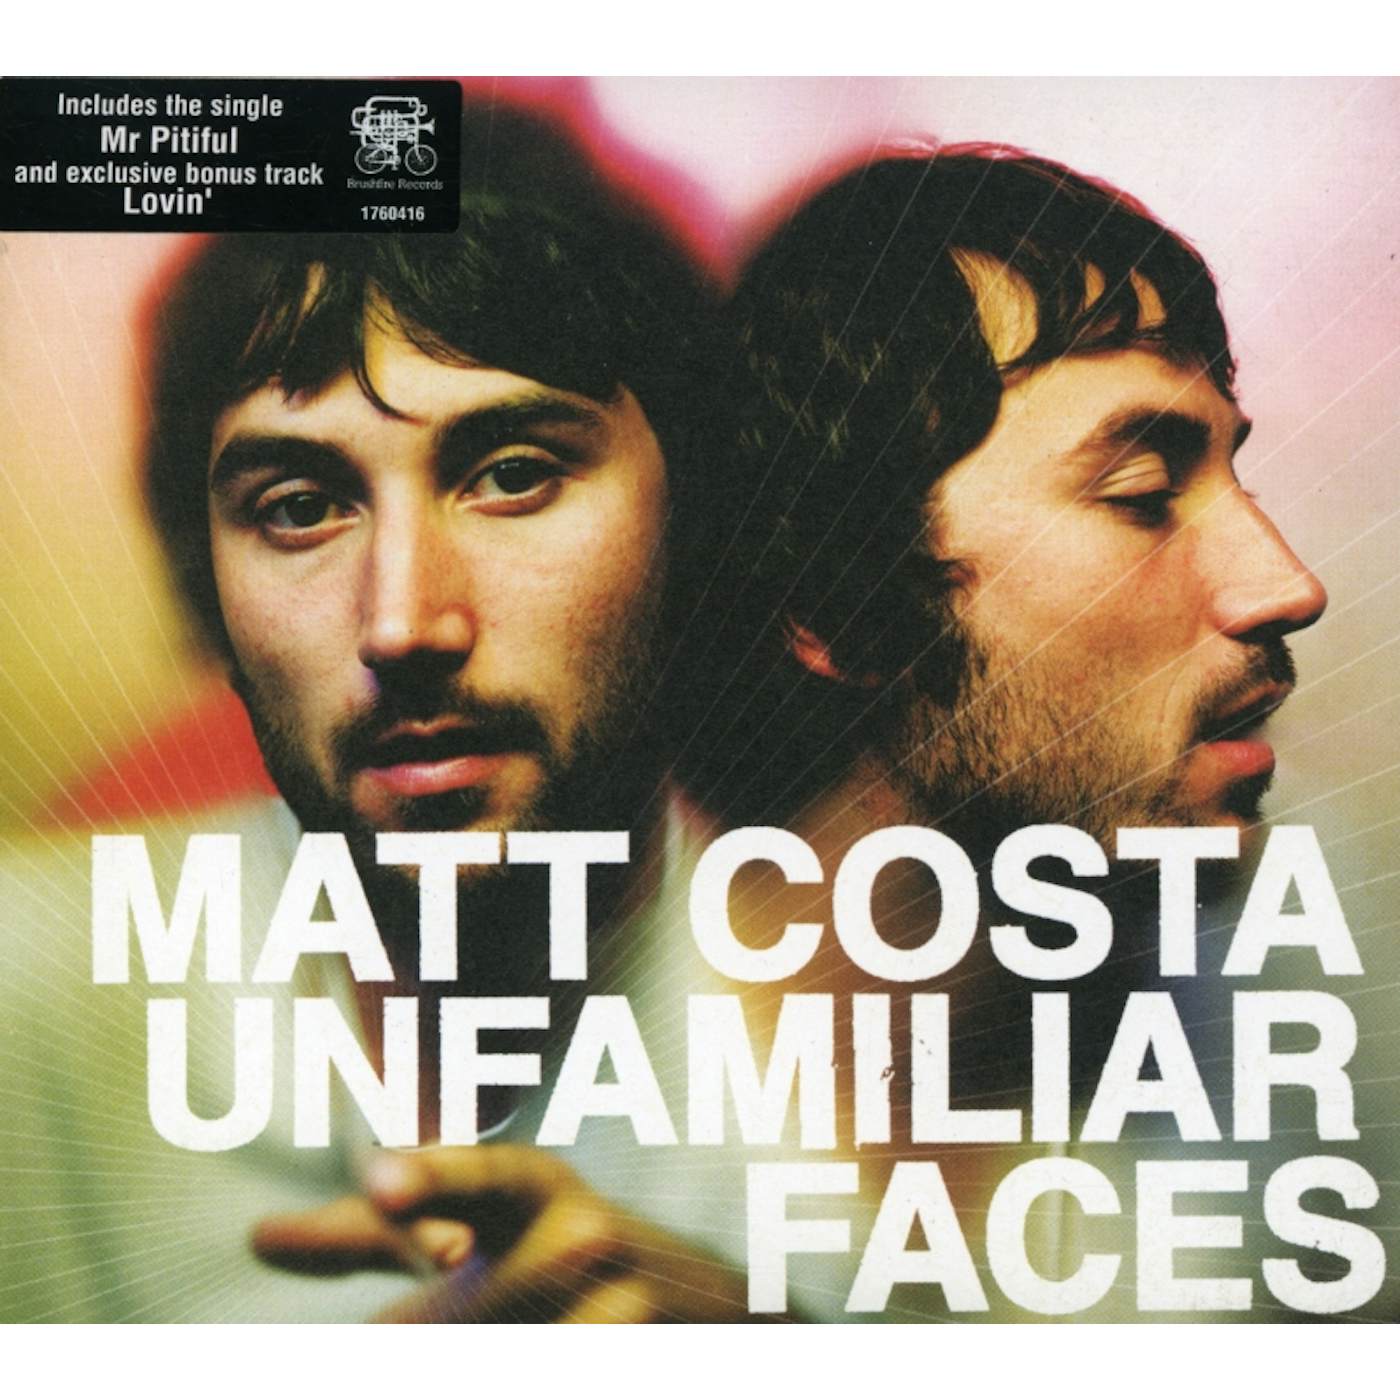 Matt Costa UNFAMILIAR FACES CD